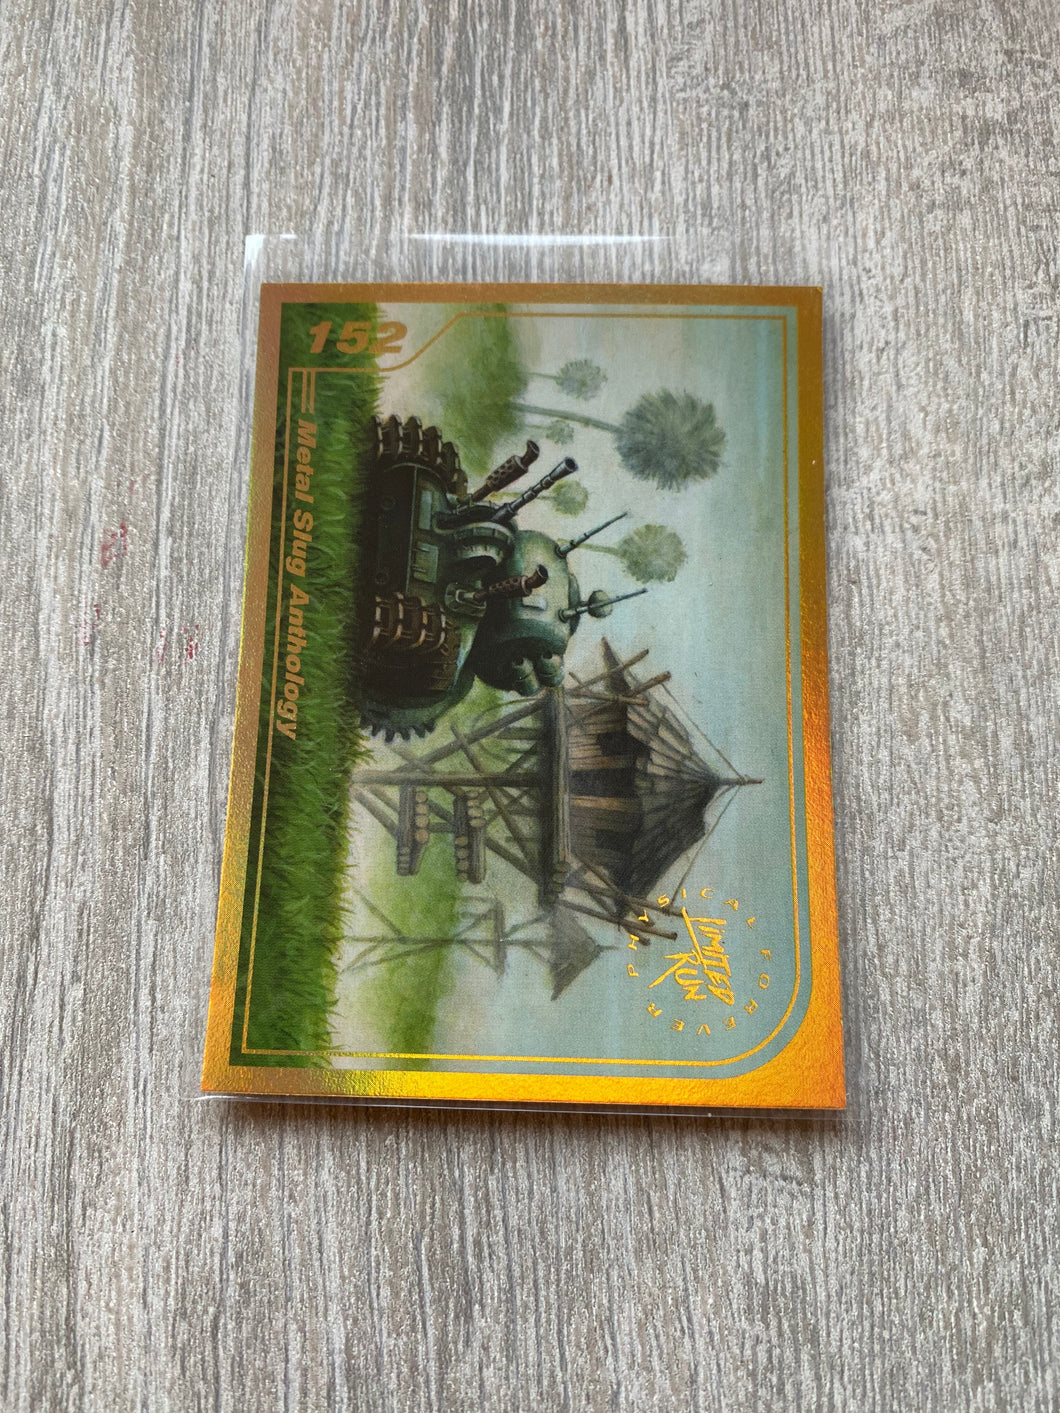 Gen2 #152 Gold Metal Slug Anthology Limited run games Trading card